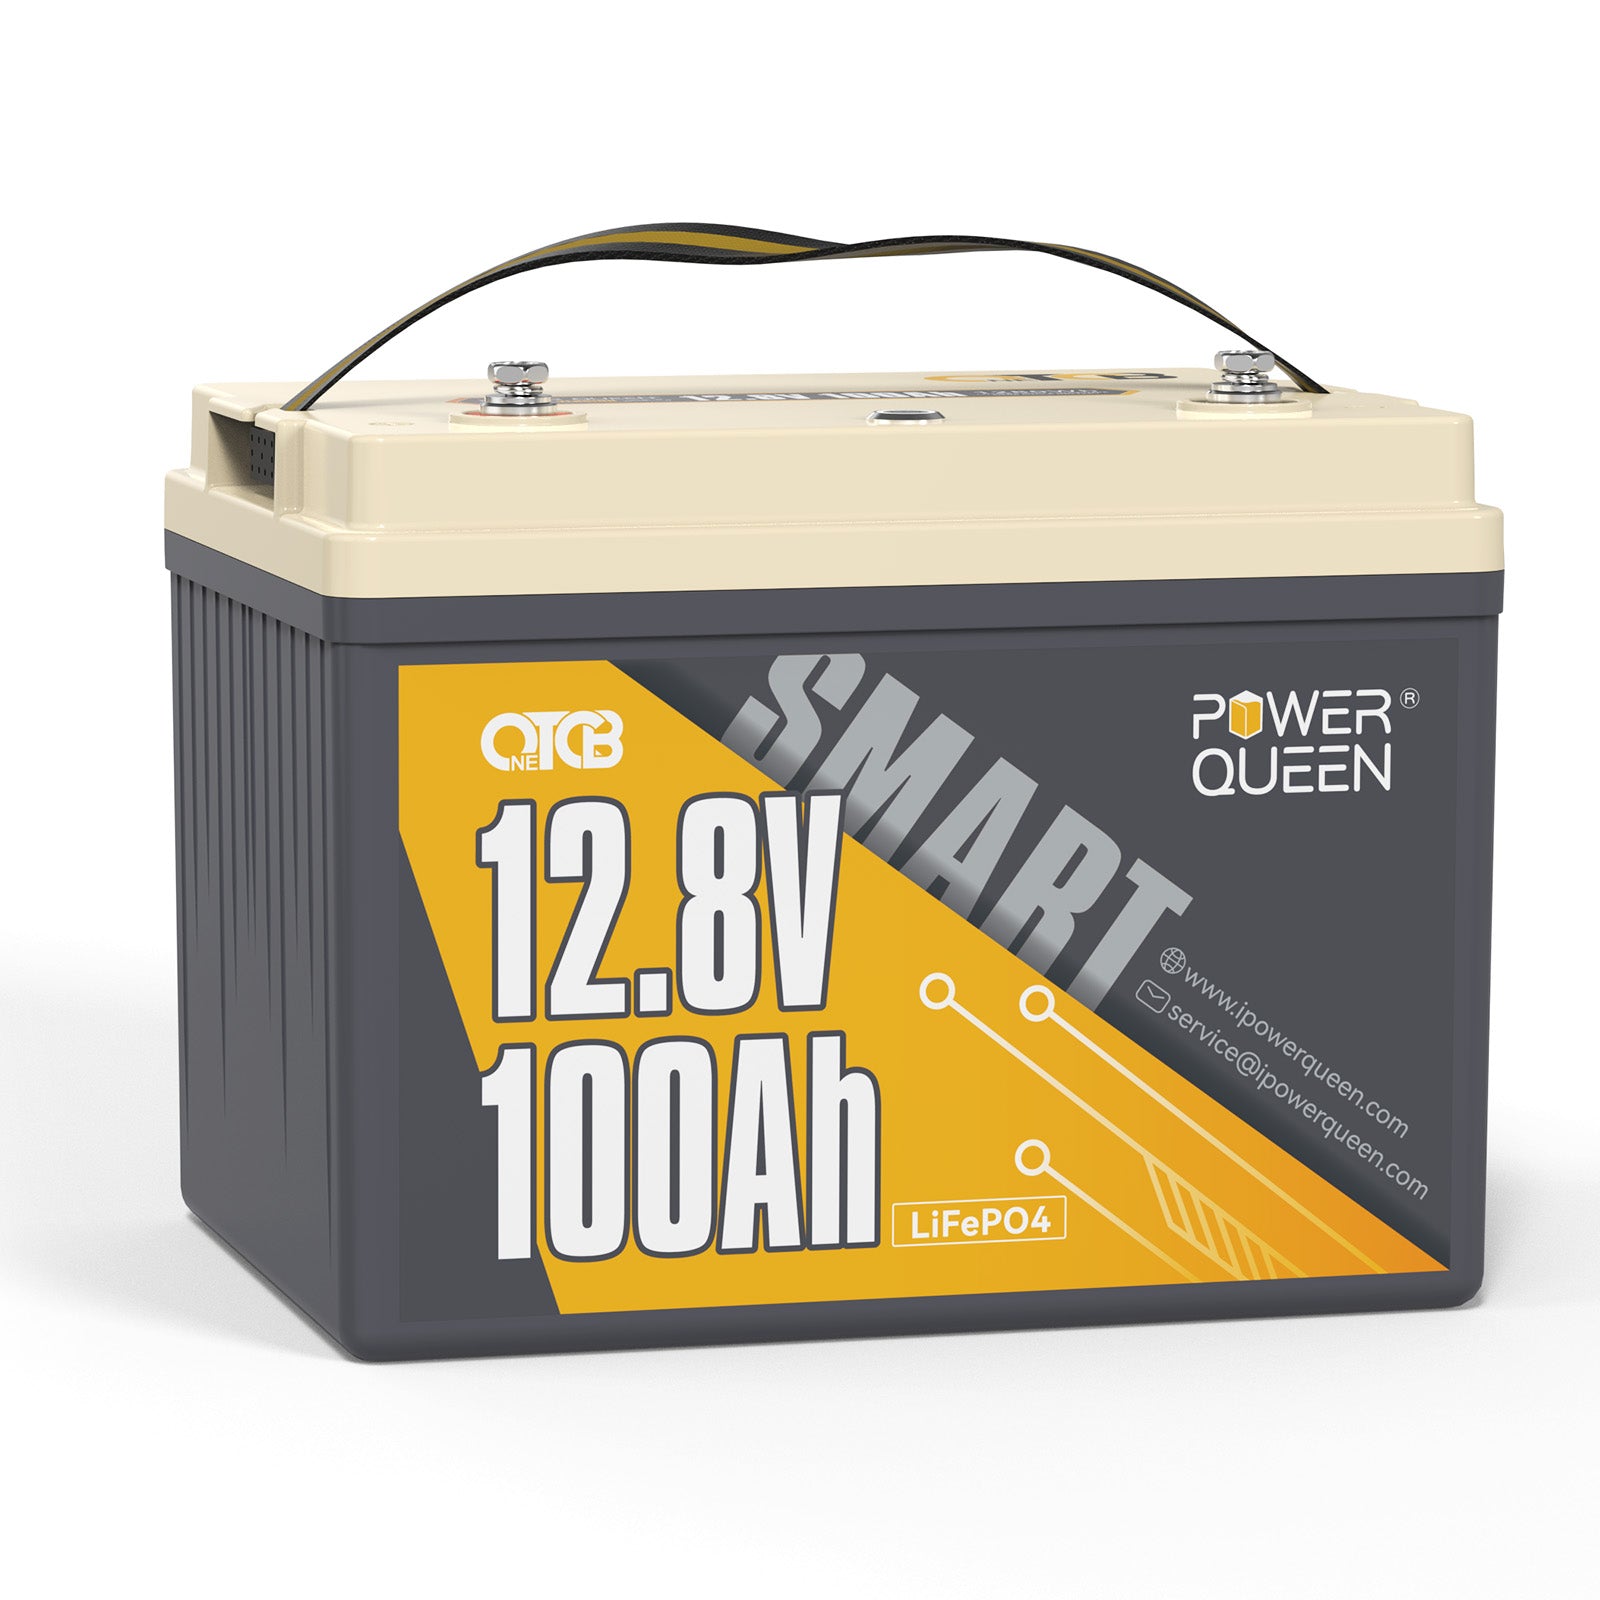 【0% IVA】Batteria Power Queen 12V 100Ah OTCB LiFePO4 a bassa temperatura con BMS 100A integrato